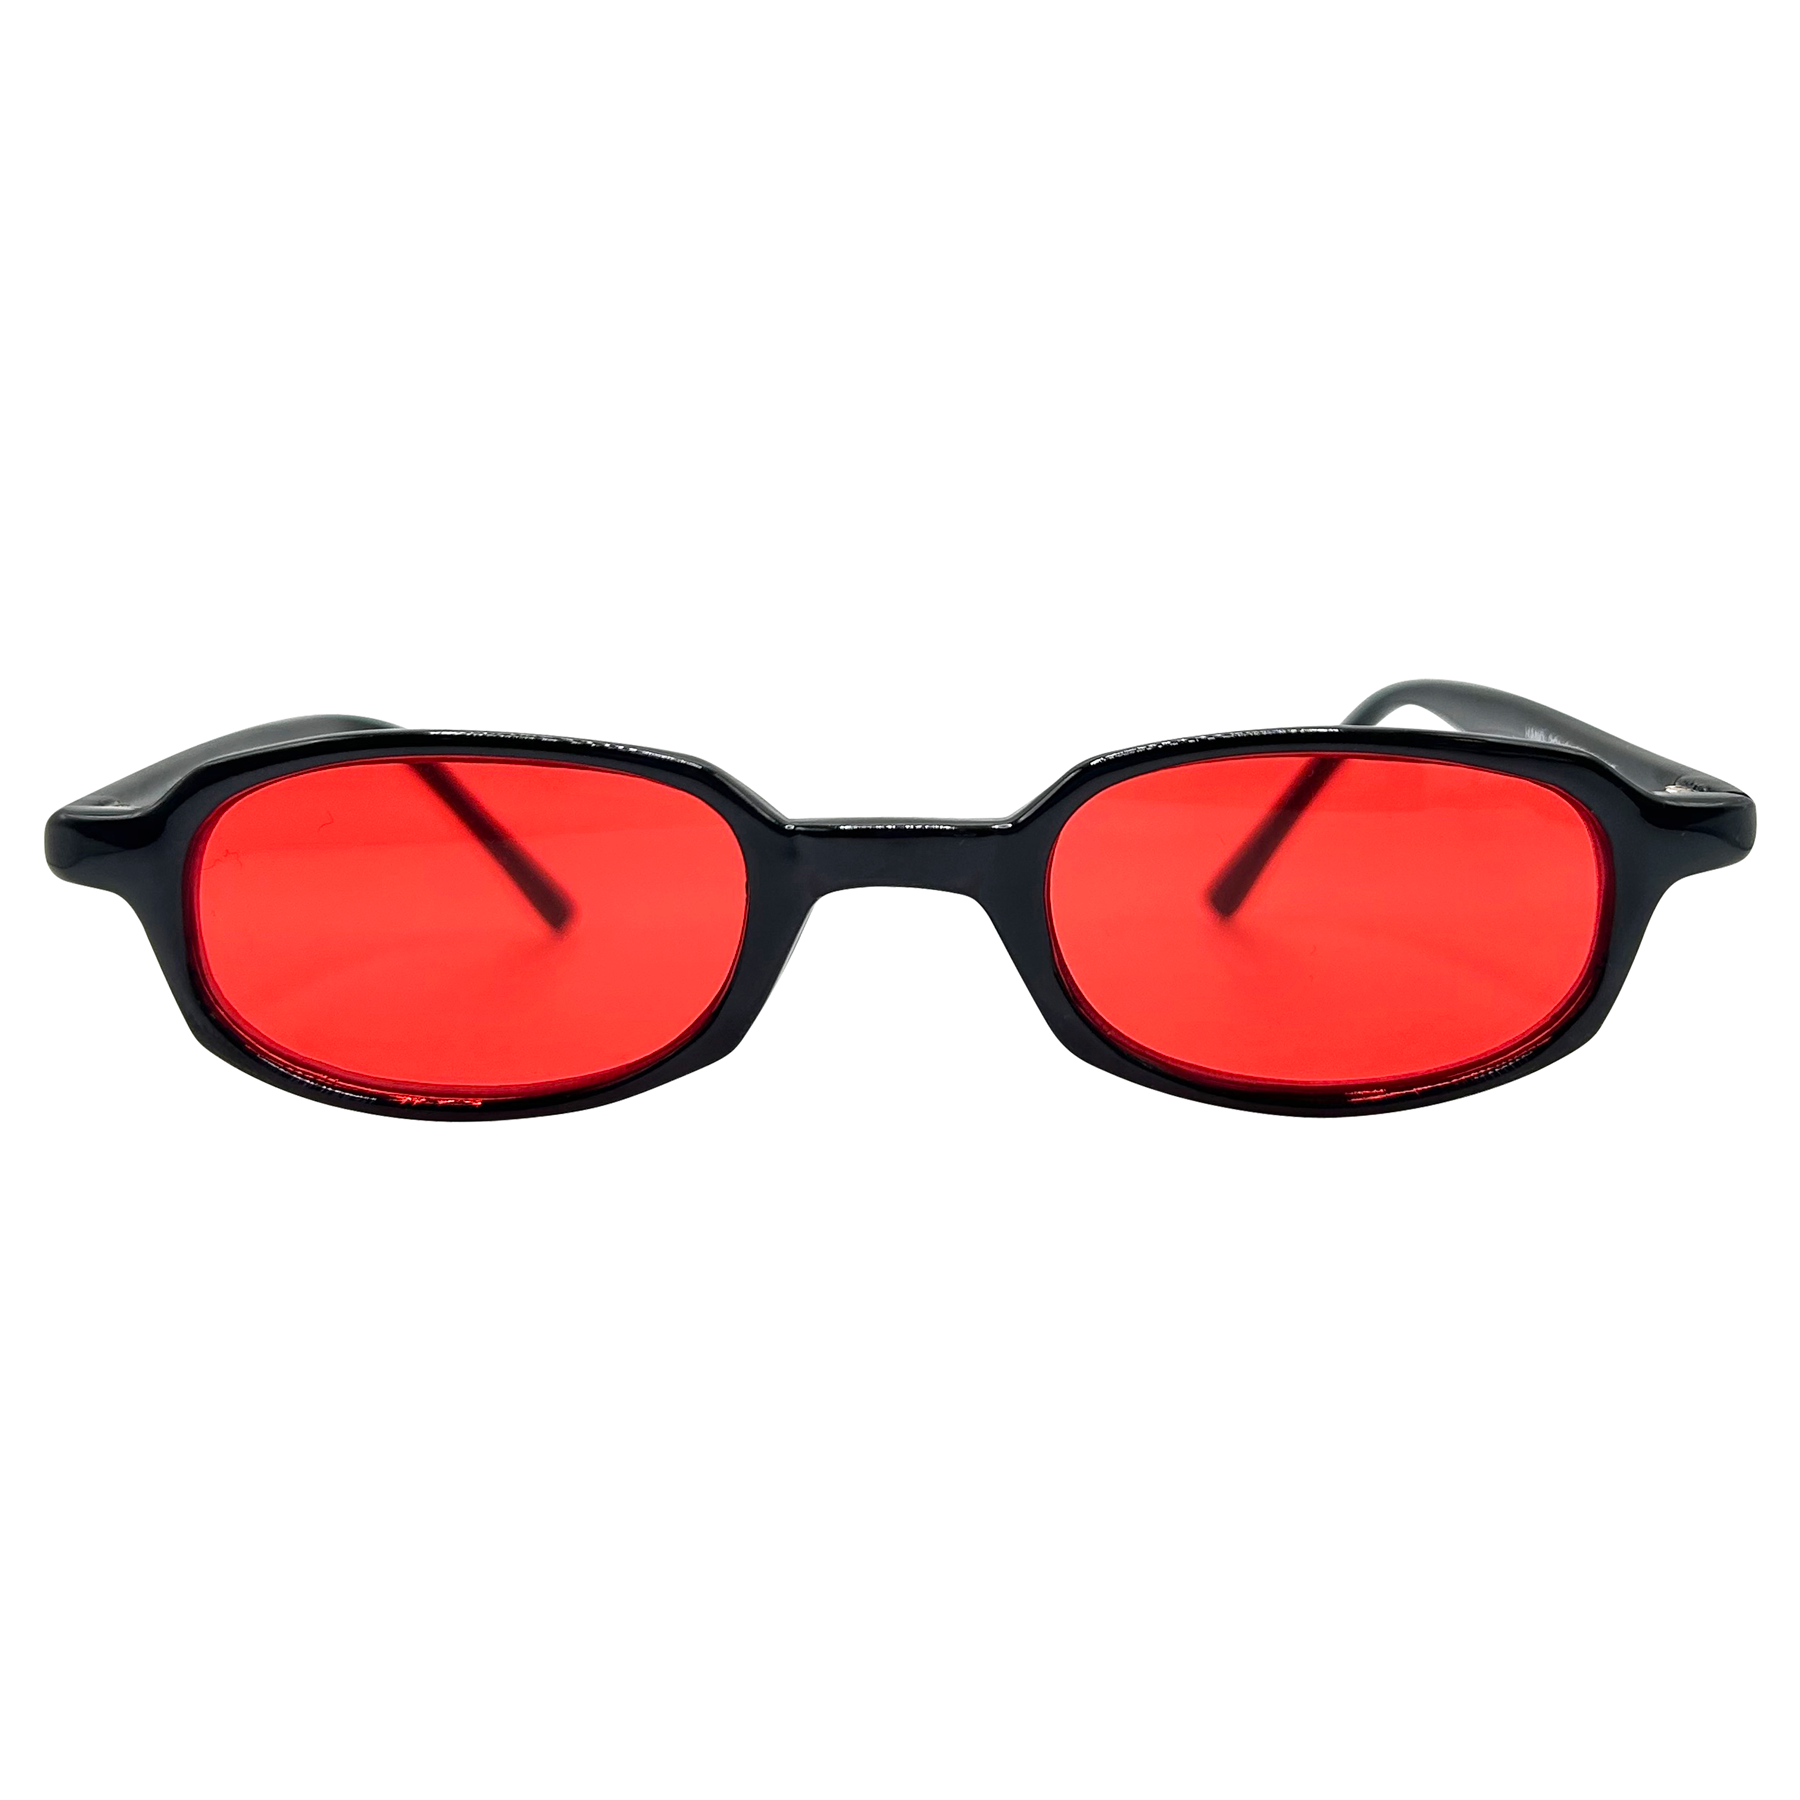 PILLS Black/Red Square Sunglasses